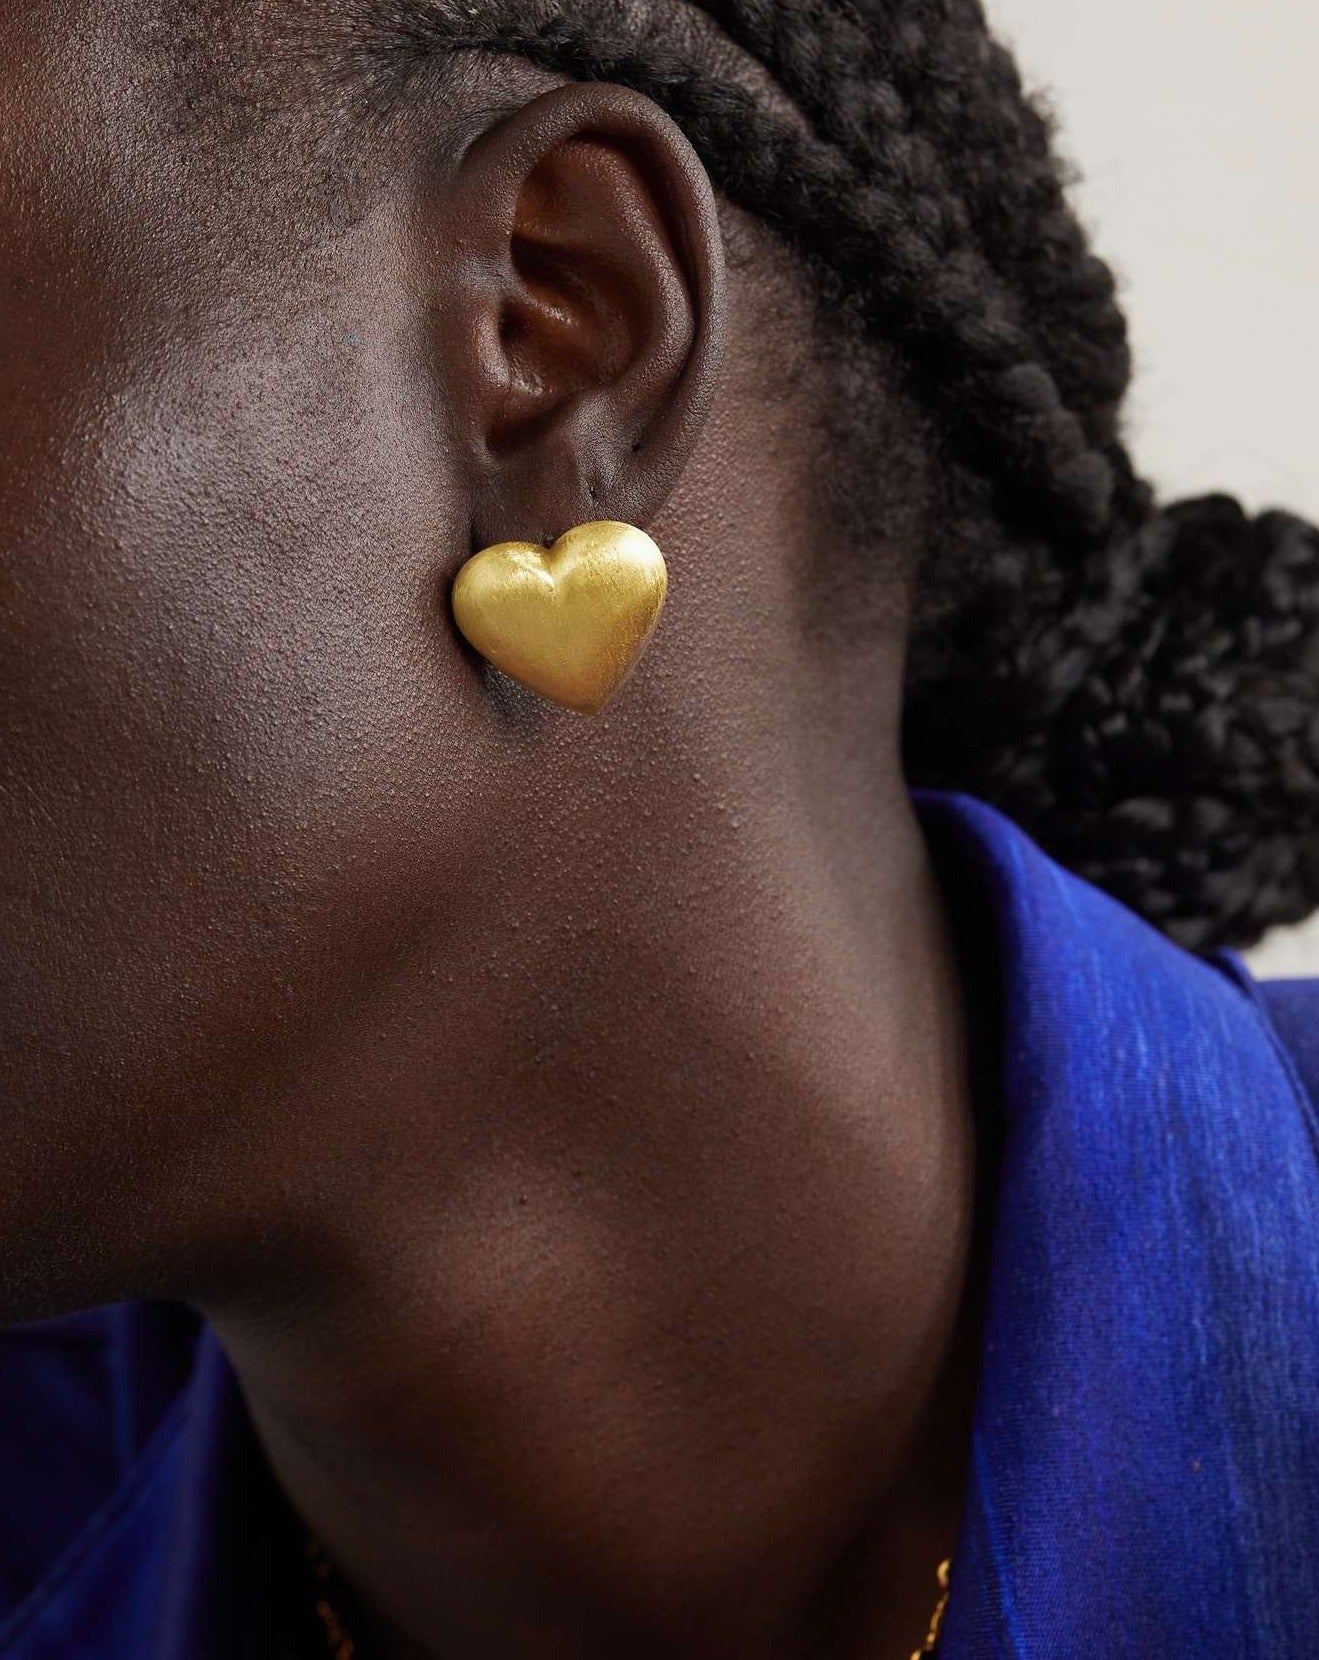 Chrome Heart Gold earrings by Crystal Haze